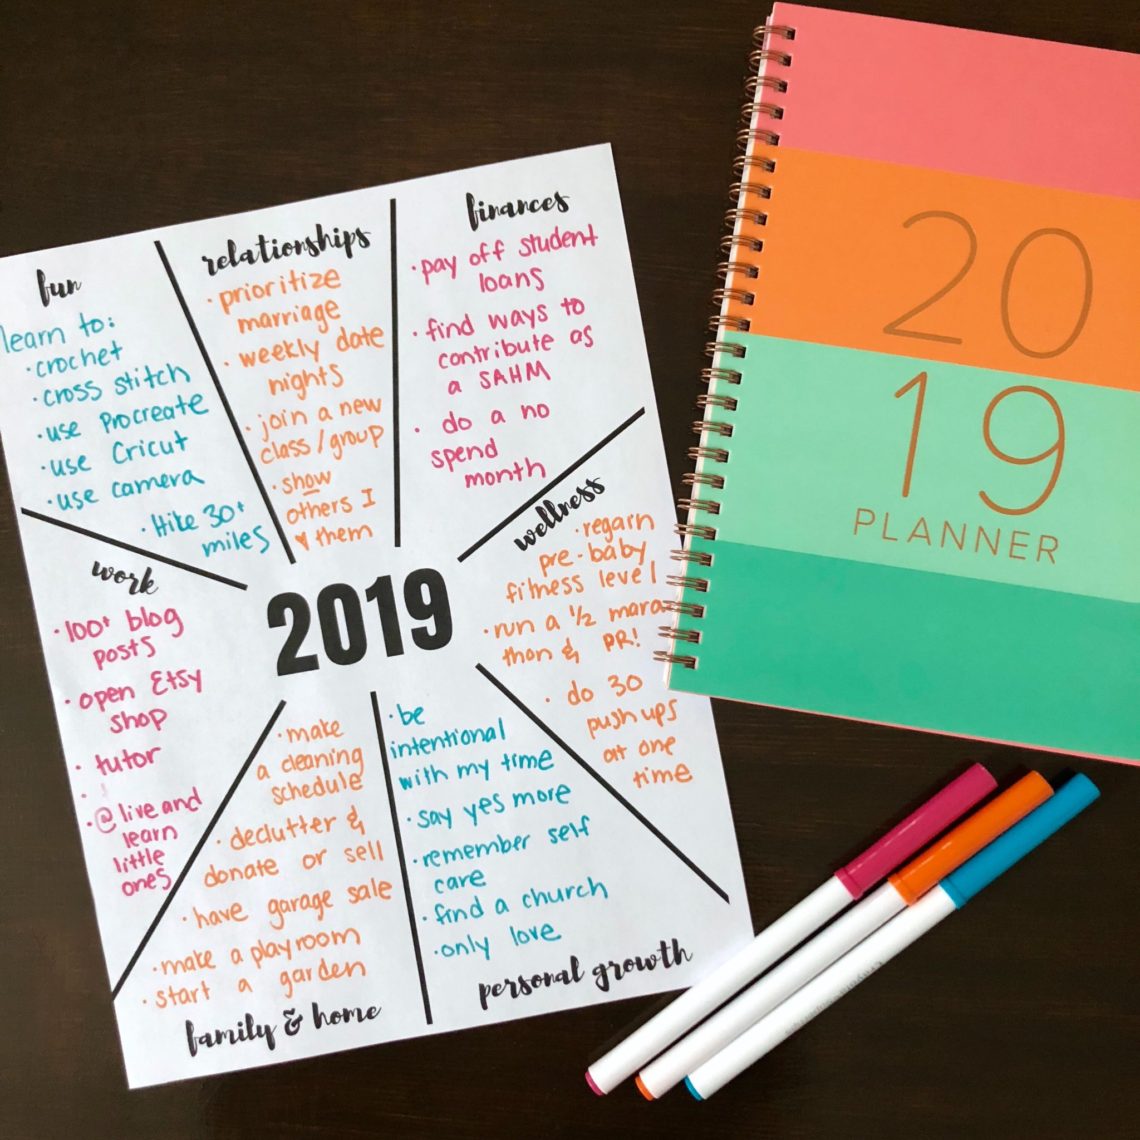 2019 New Year's Resolution free printable goal planning worksheet